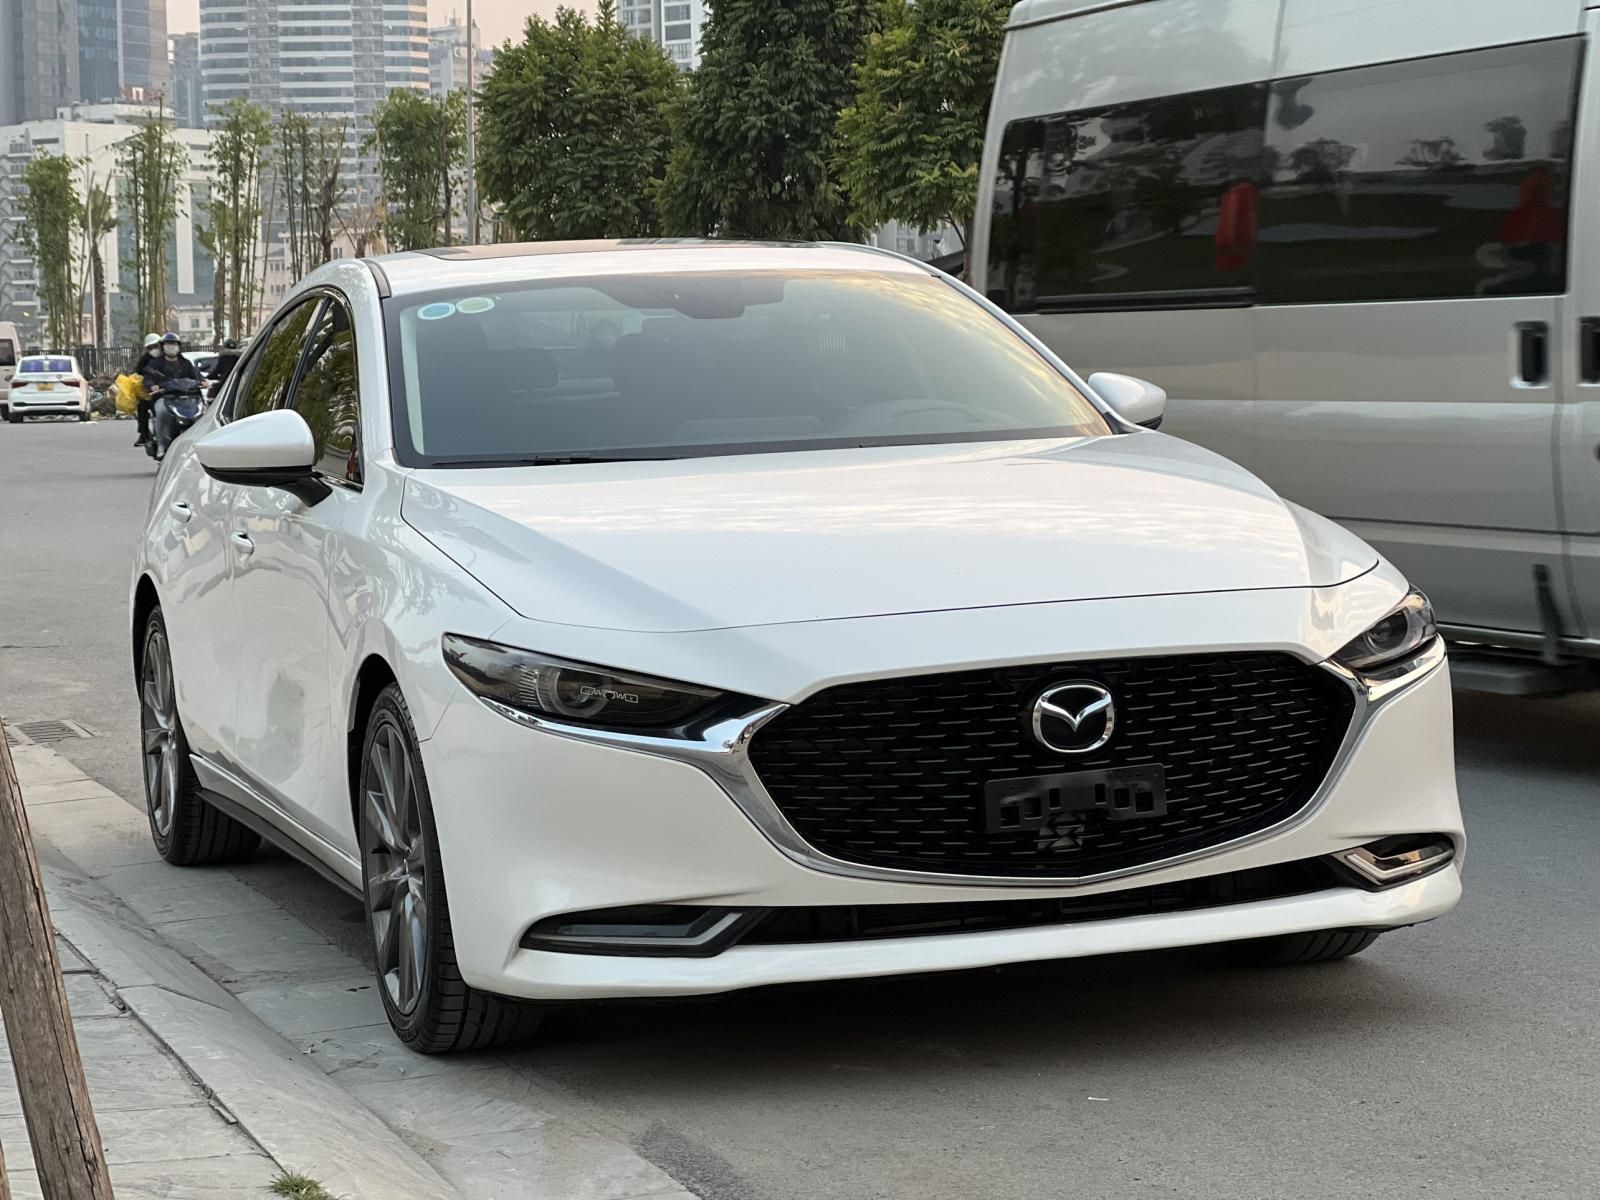 Mazda 3 2020 - Phiên bản 2.0 Luxury